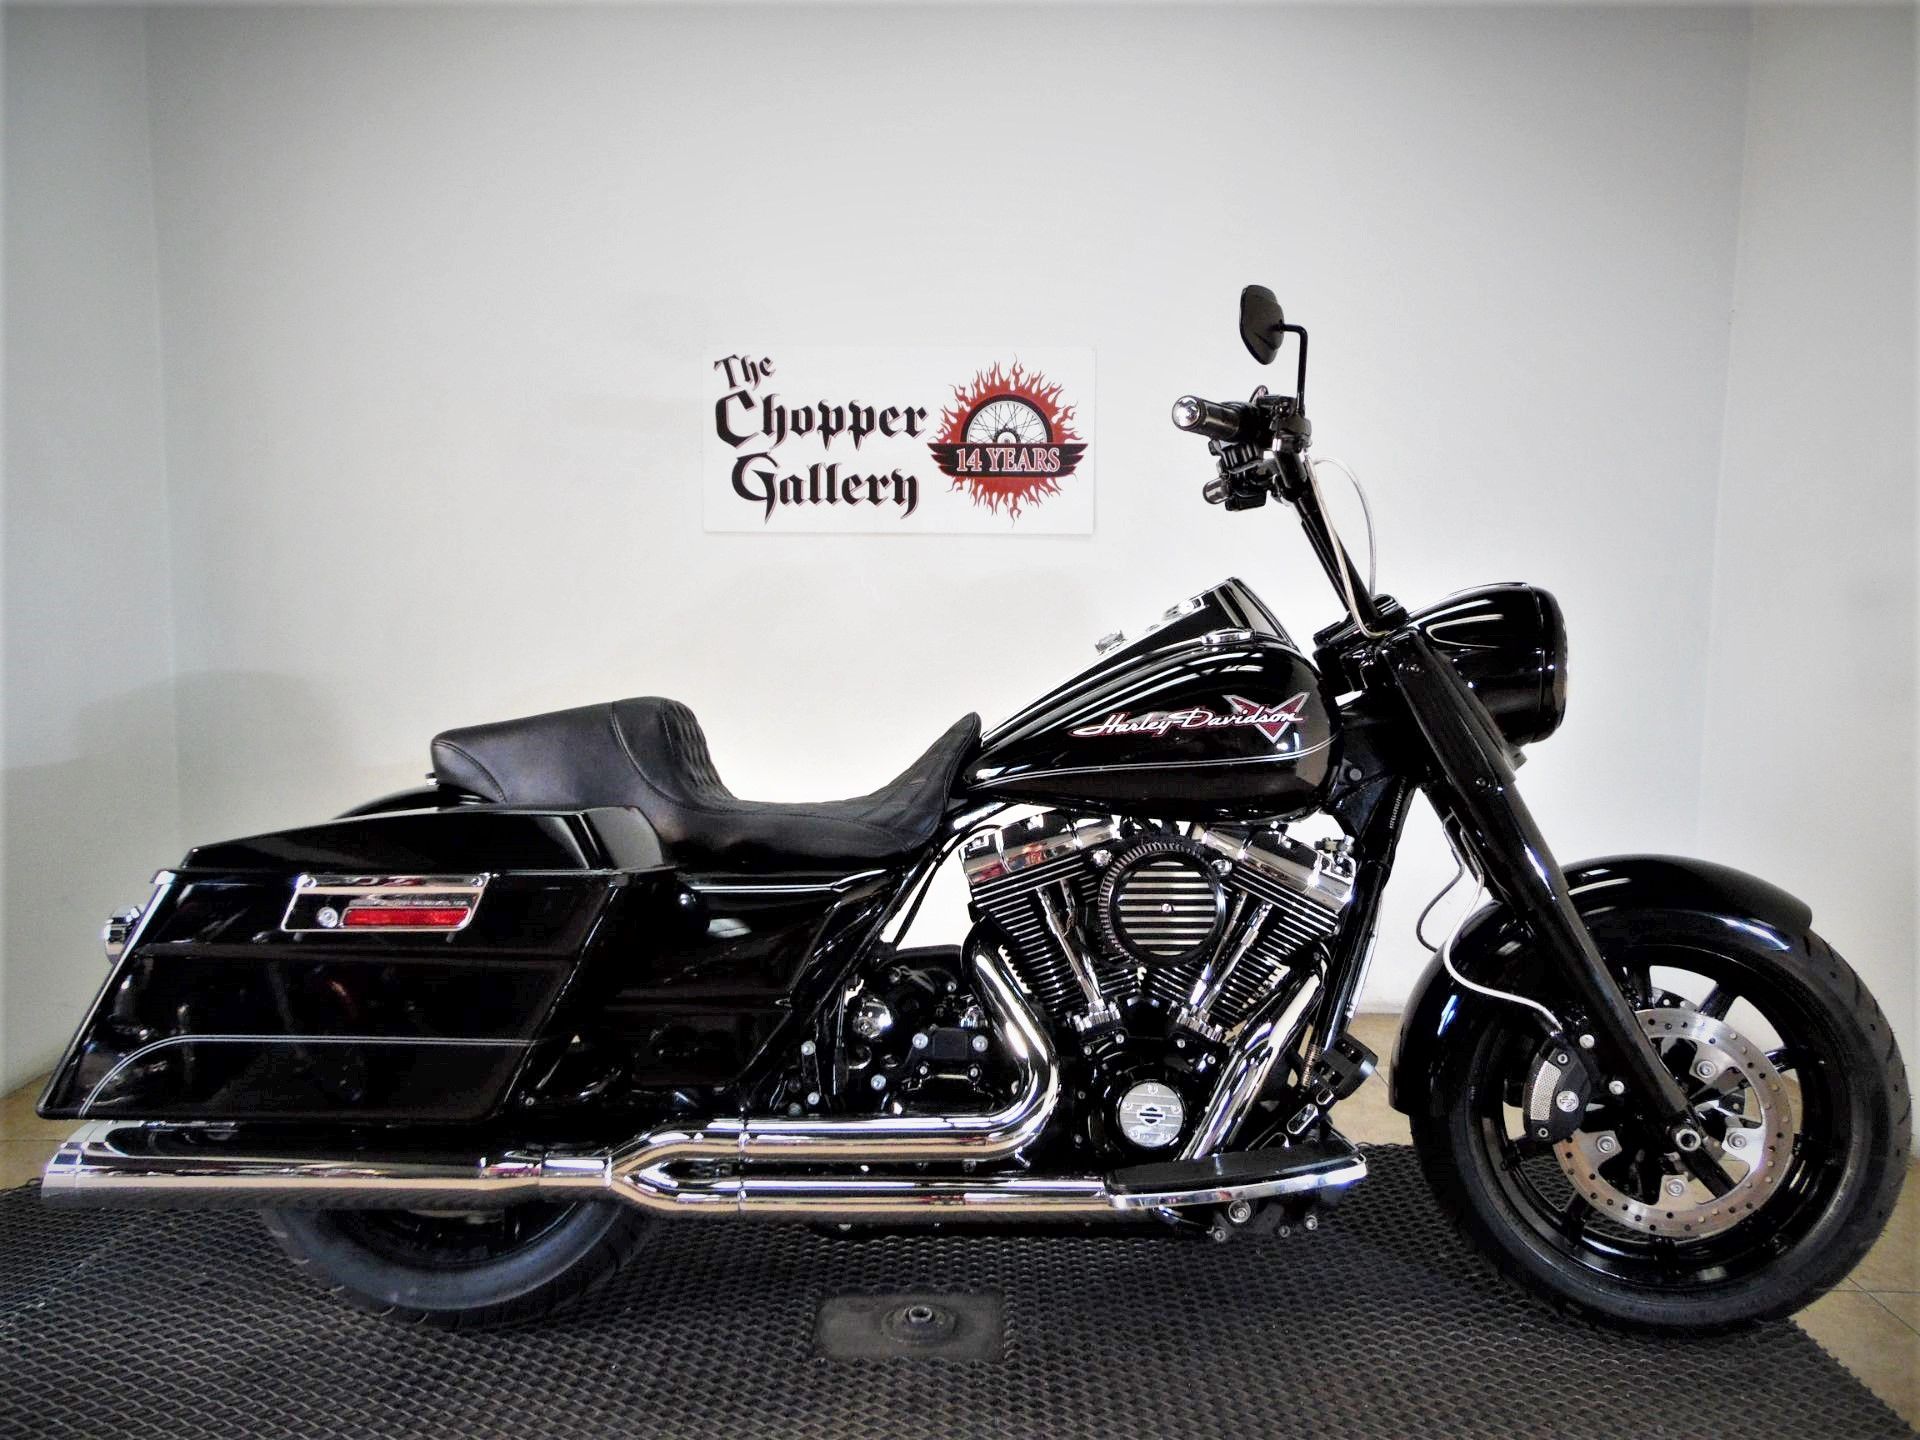 2013 Harley-Davidson Road King® in Temecula, California - Photo 7